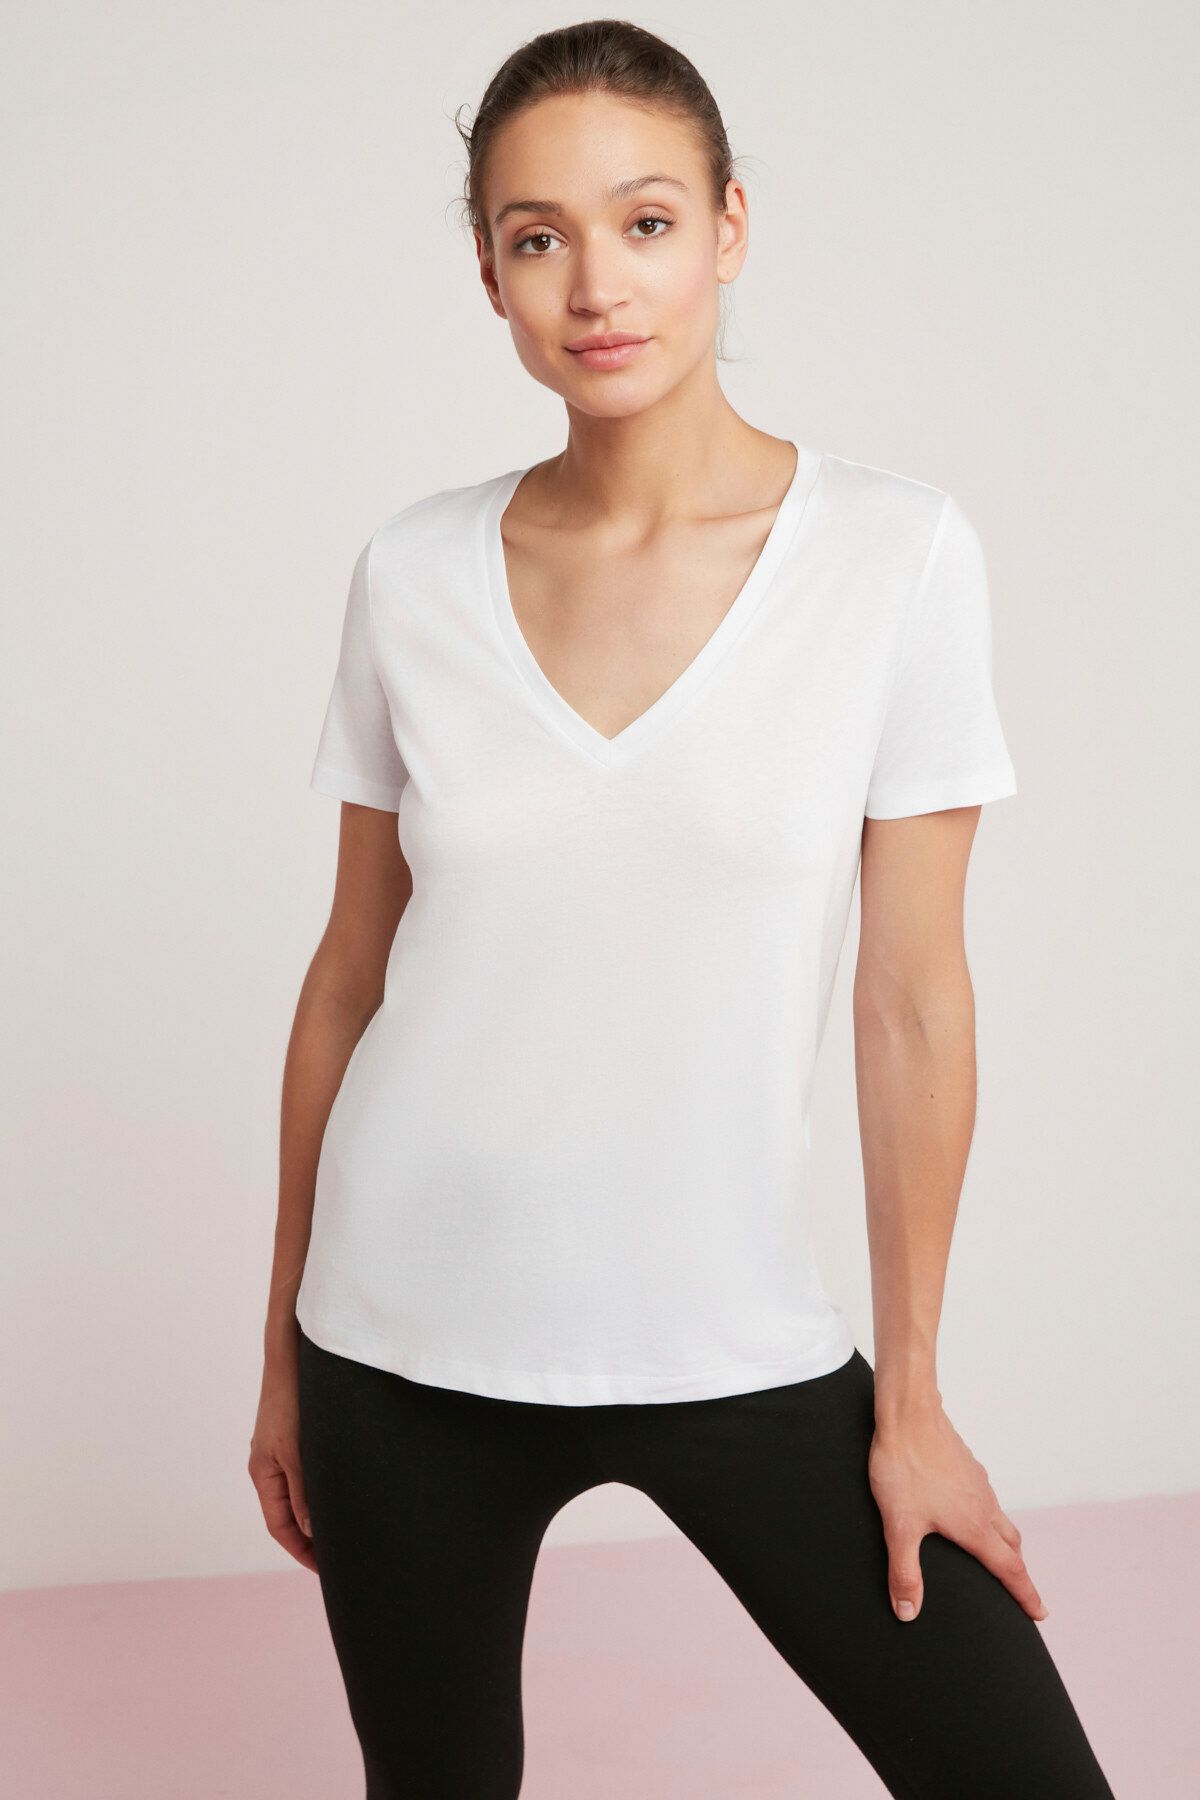 ETHIQUET Mabel Kadın 100% Pamuk V Yaka Yarım Kollu Beyaz T-shirt